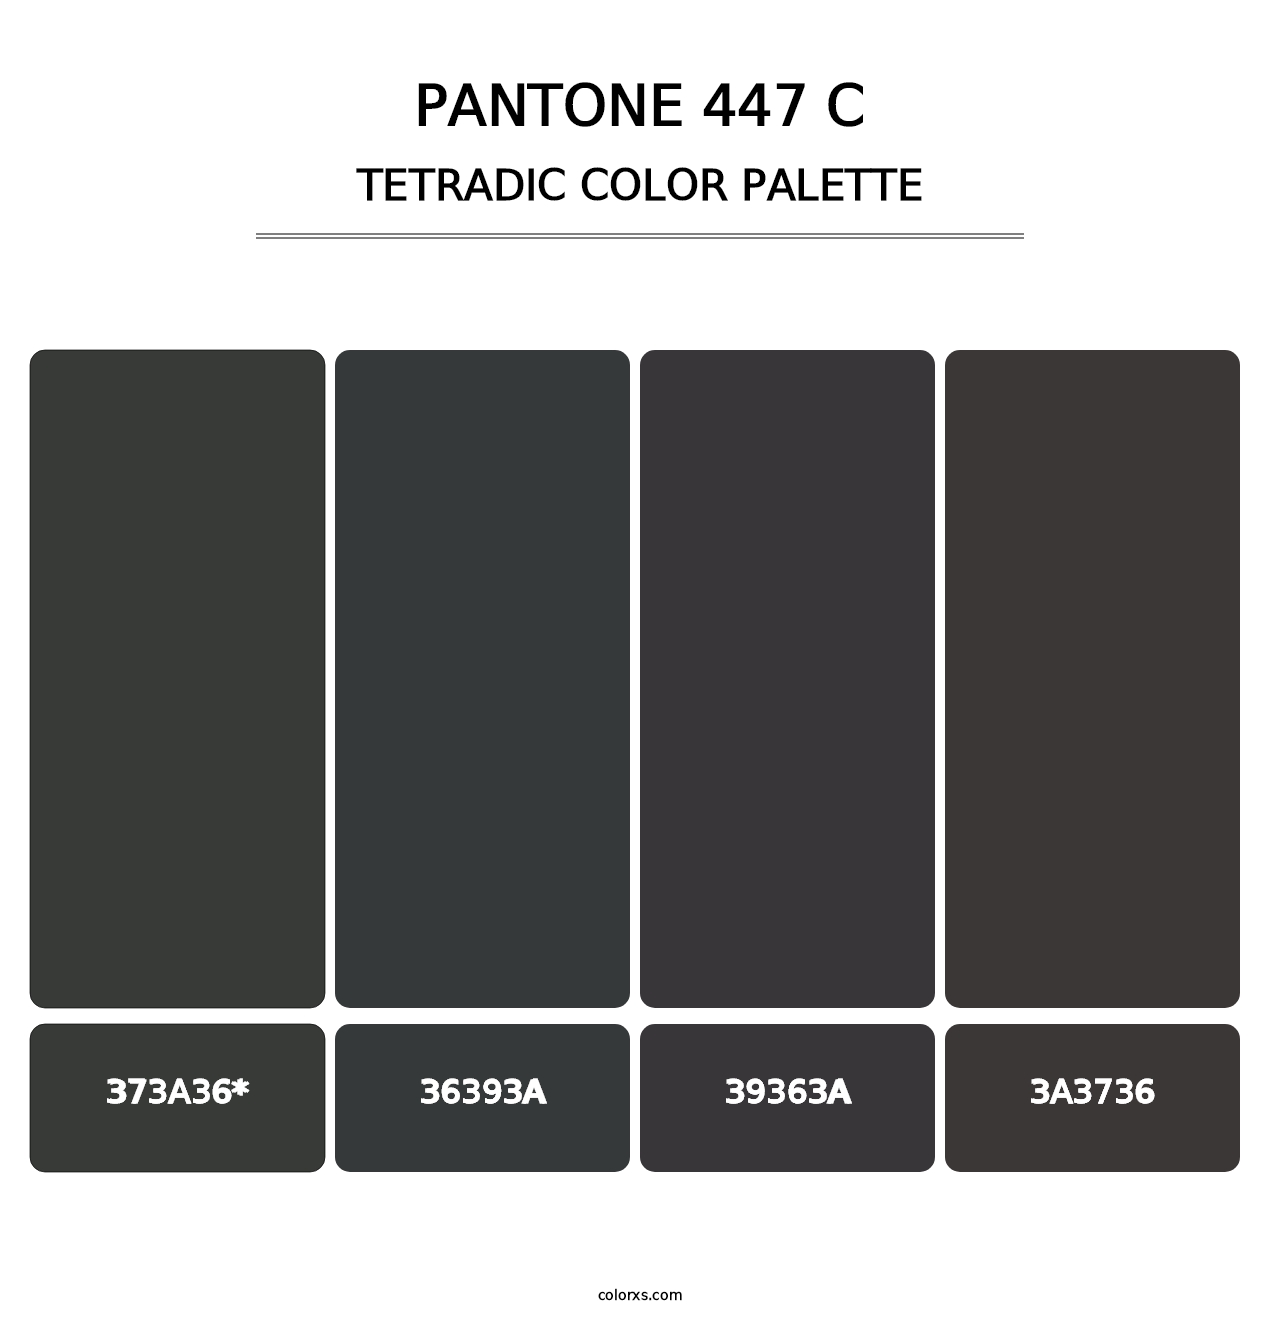 PANTONE 447 C - Tetradic Color Palette